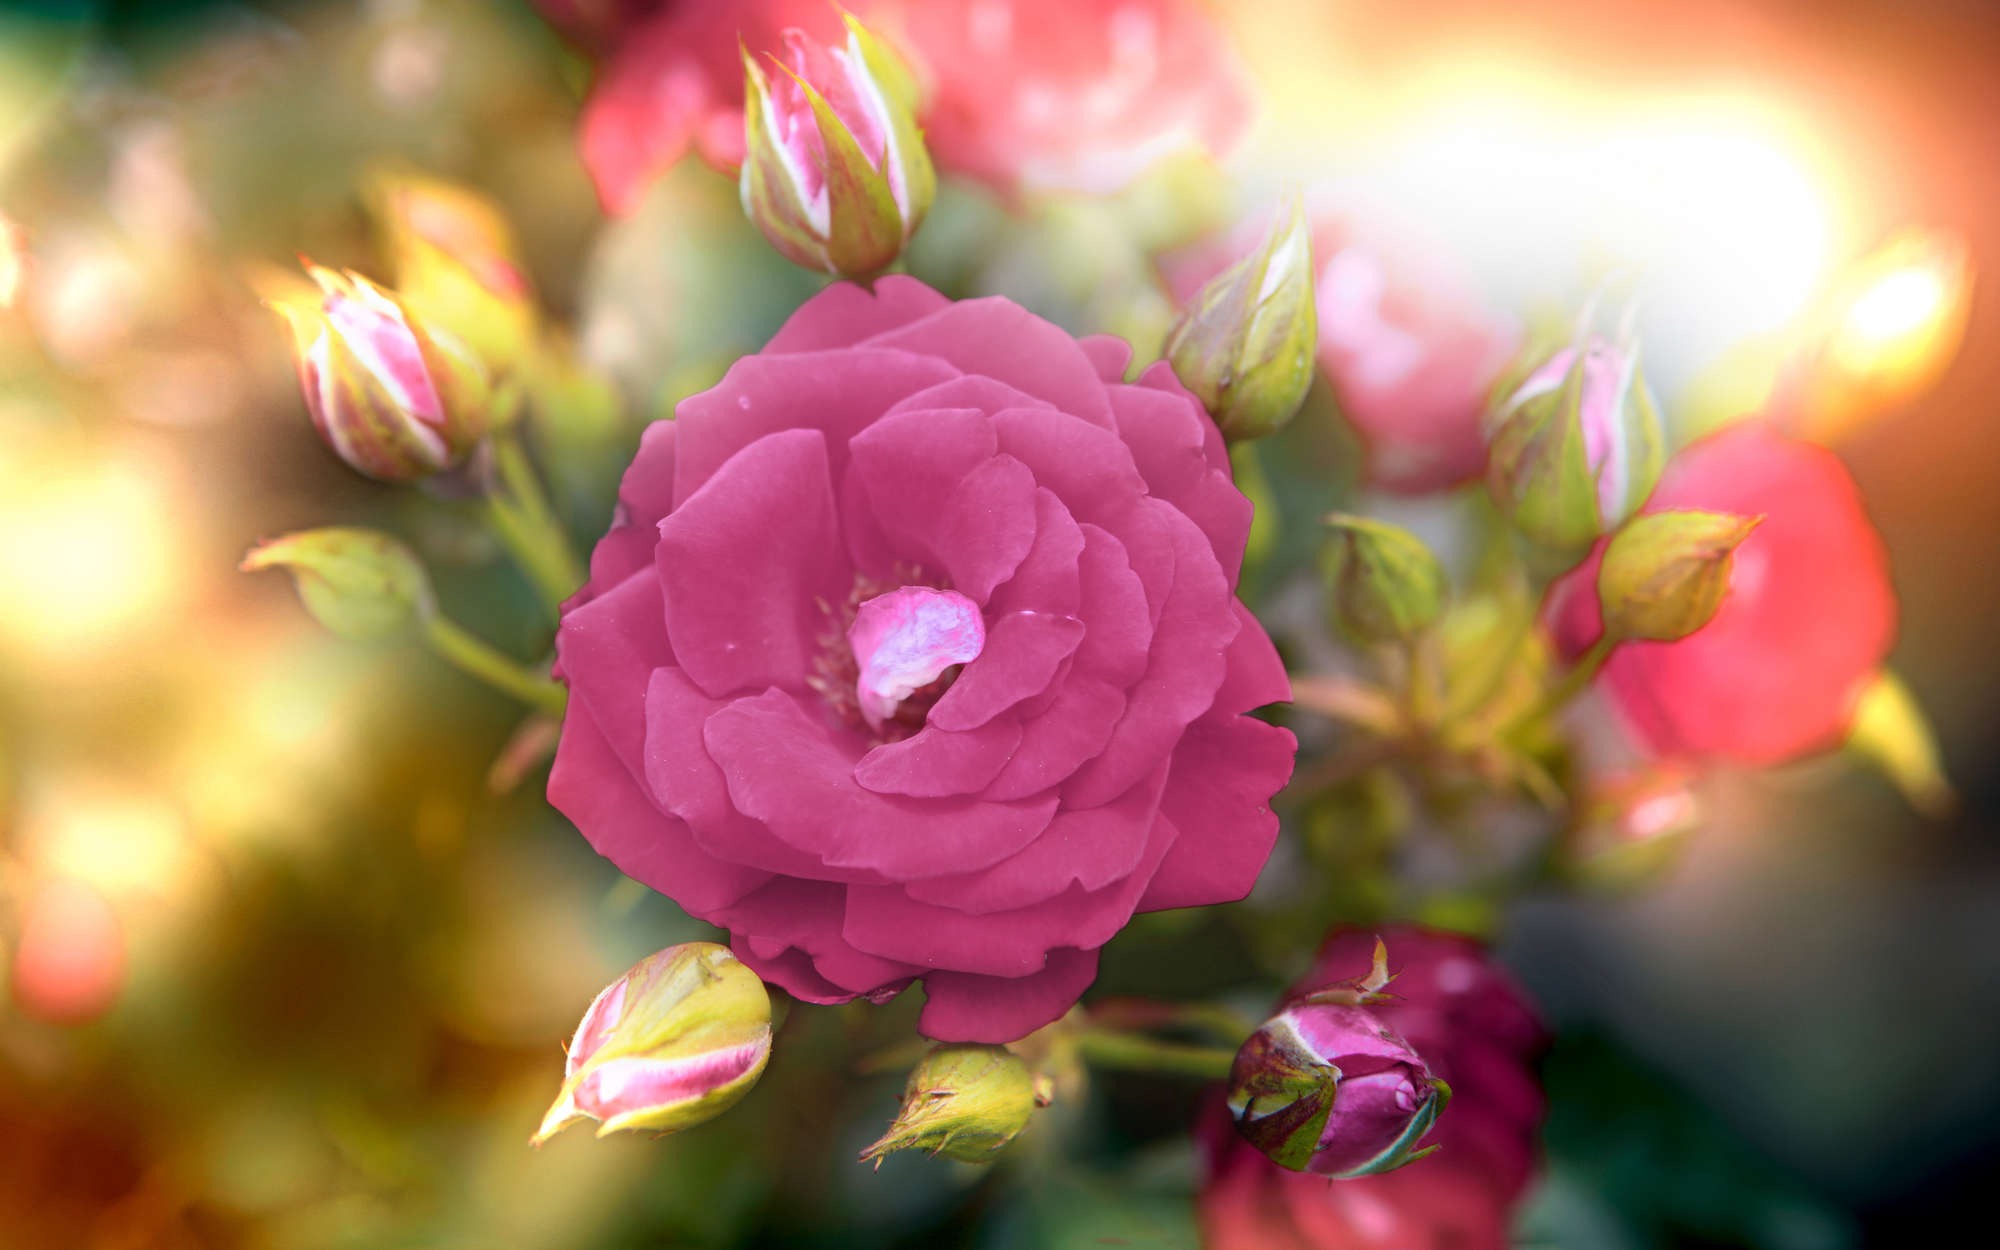             Photo wallpaper Flower with blossom in pink - Matt smooth fleece
        